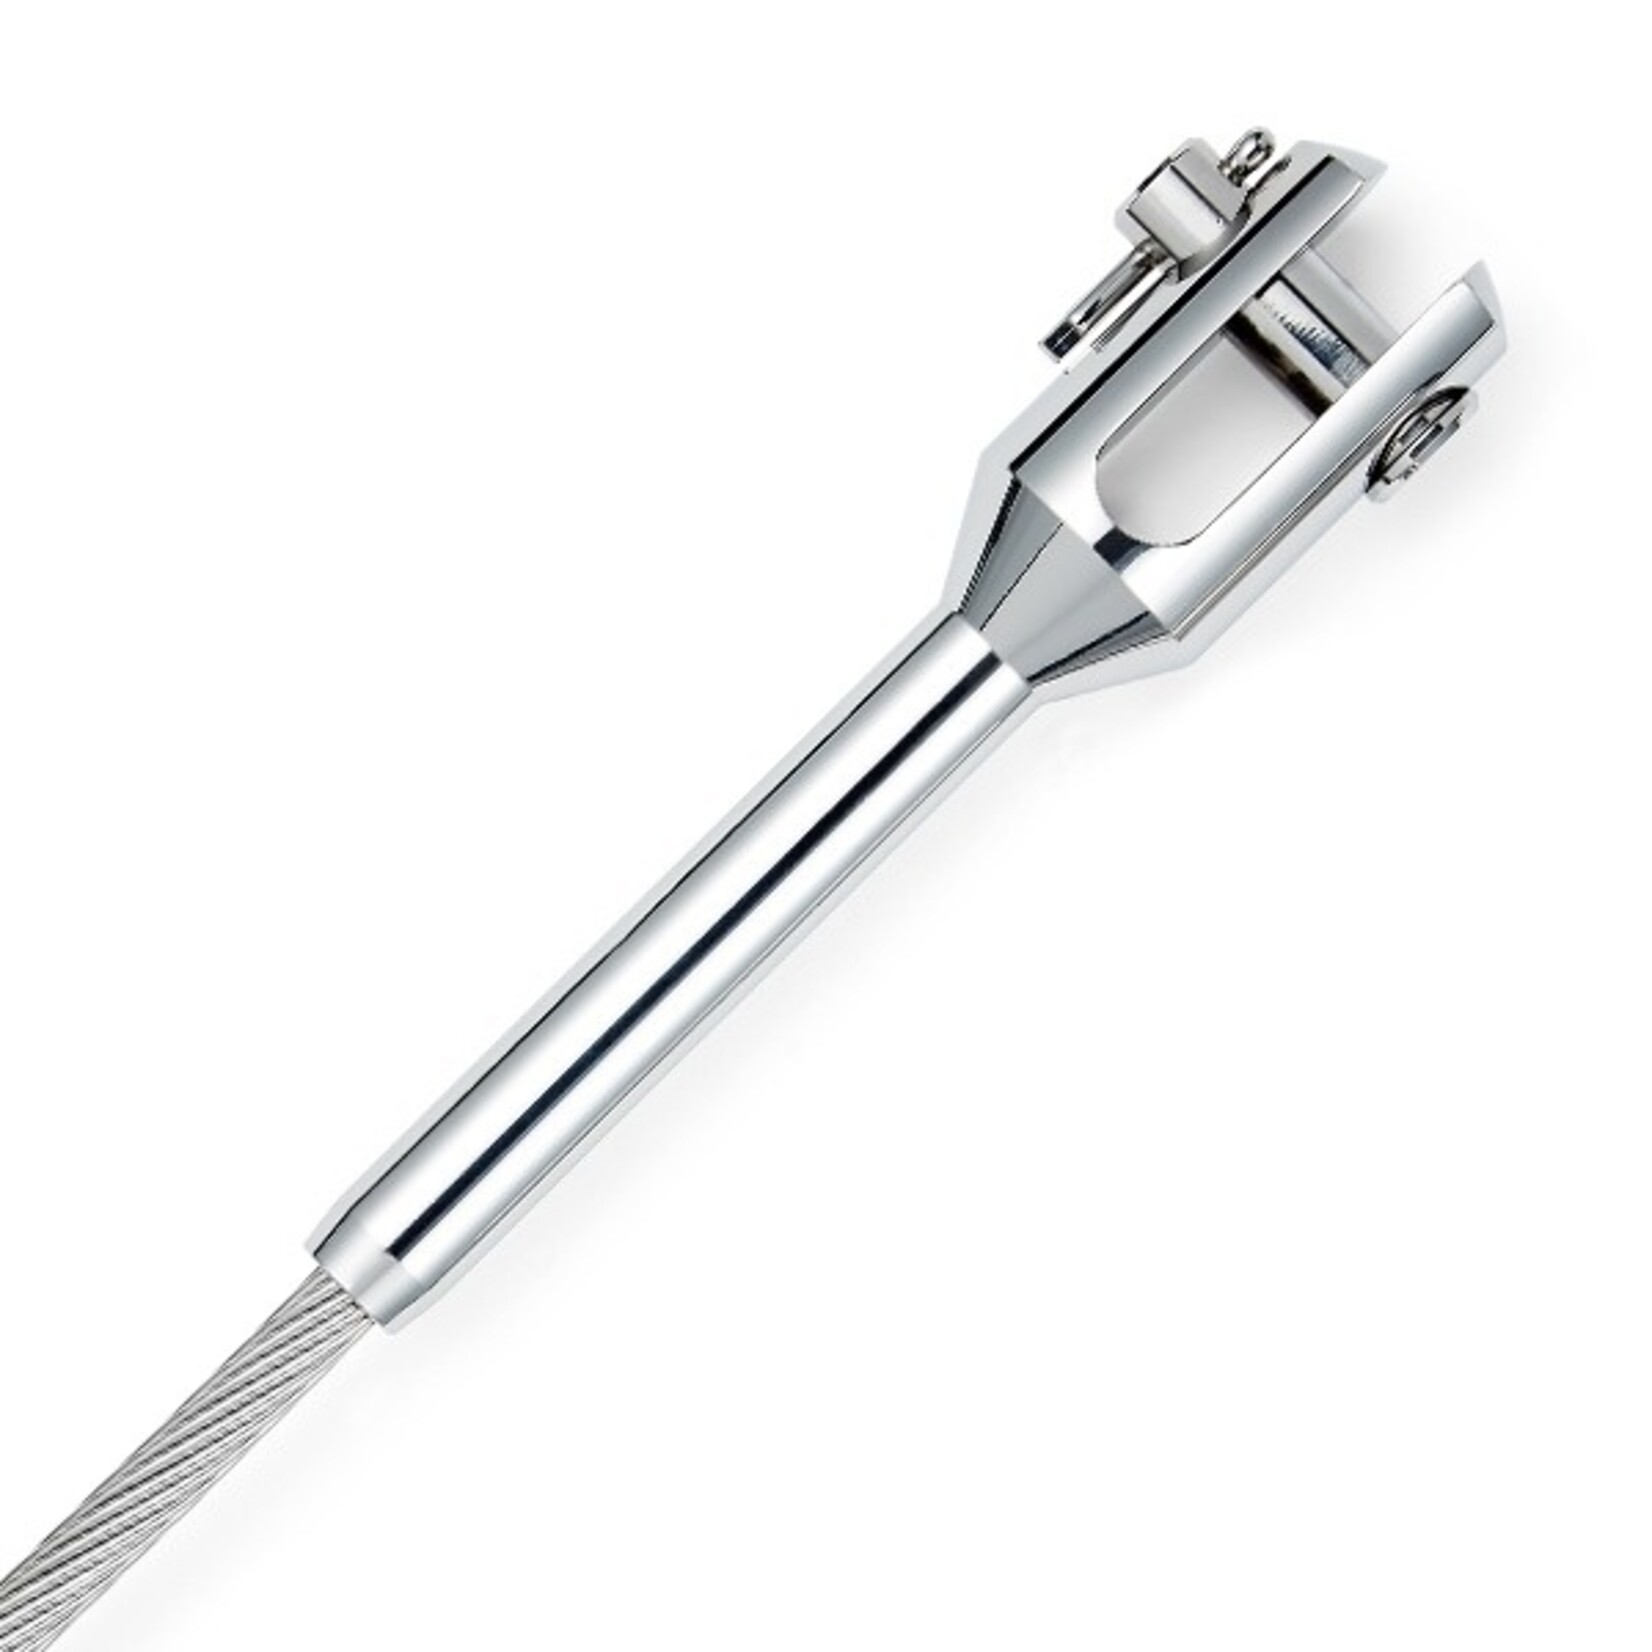 STA-LOK Swage fork  4mm. machined